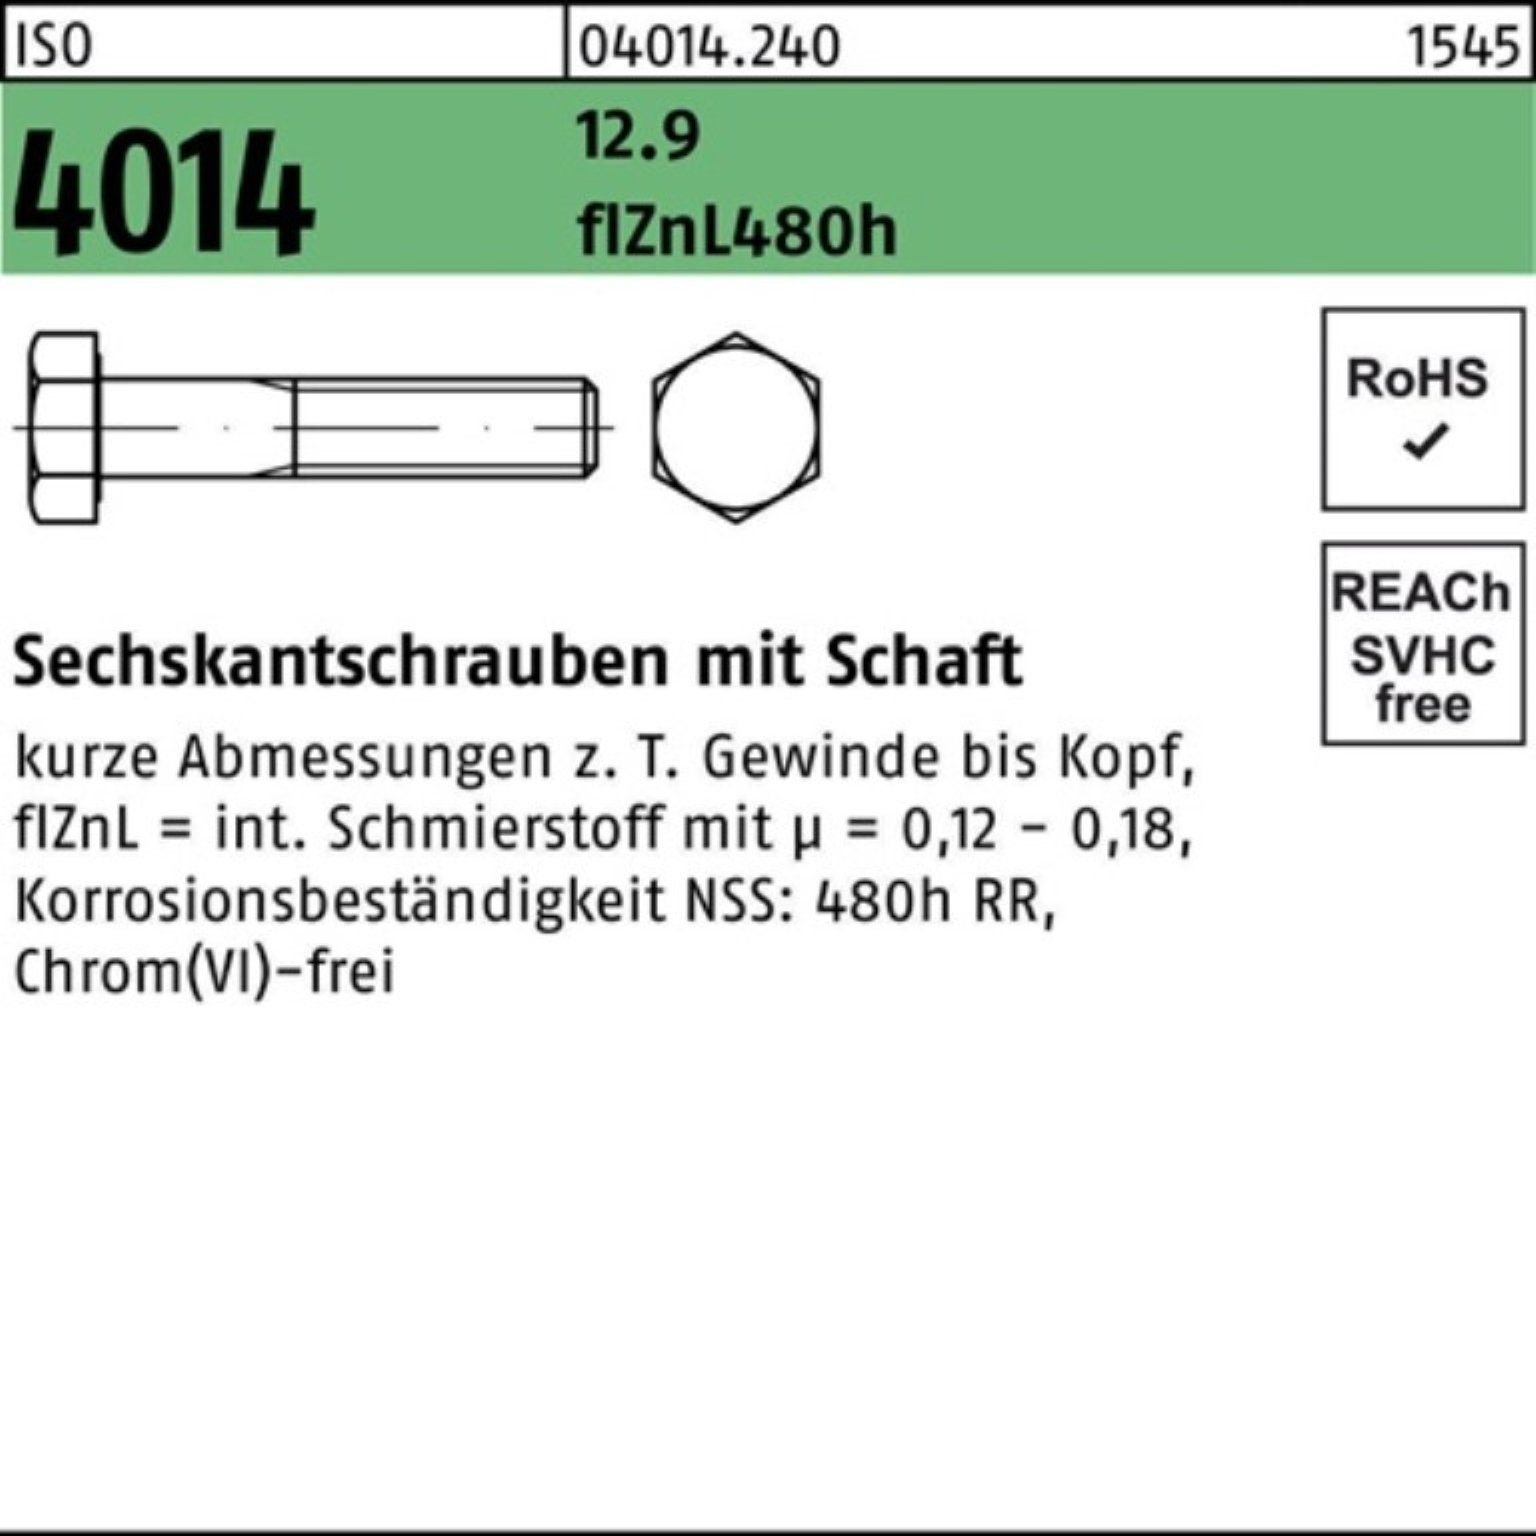 Sechskantschraube Sechskantschraube 4014 12.9 M10x100 ISO flZnL Schaft Reyher z 100er Pack 480h